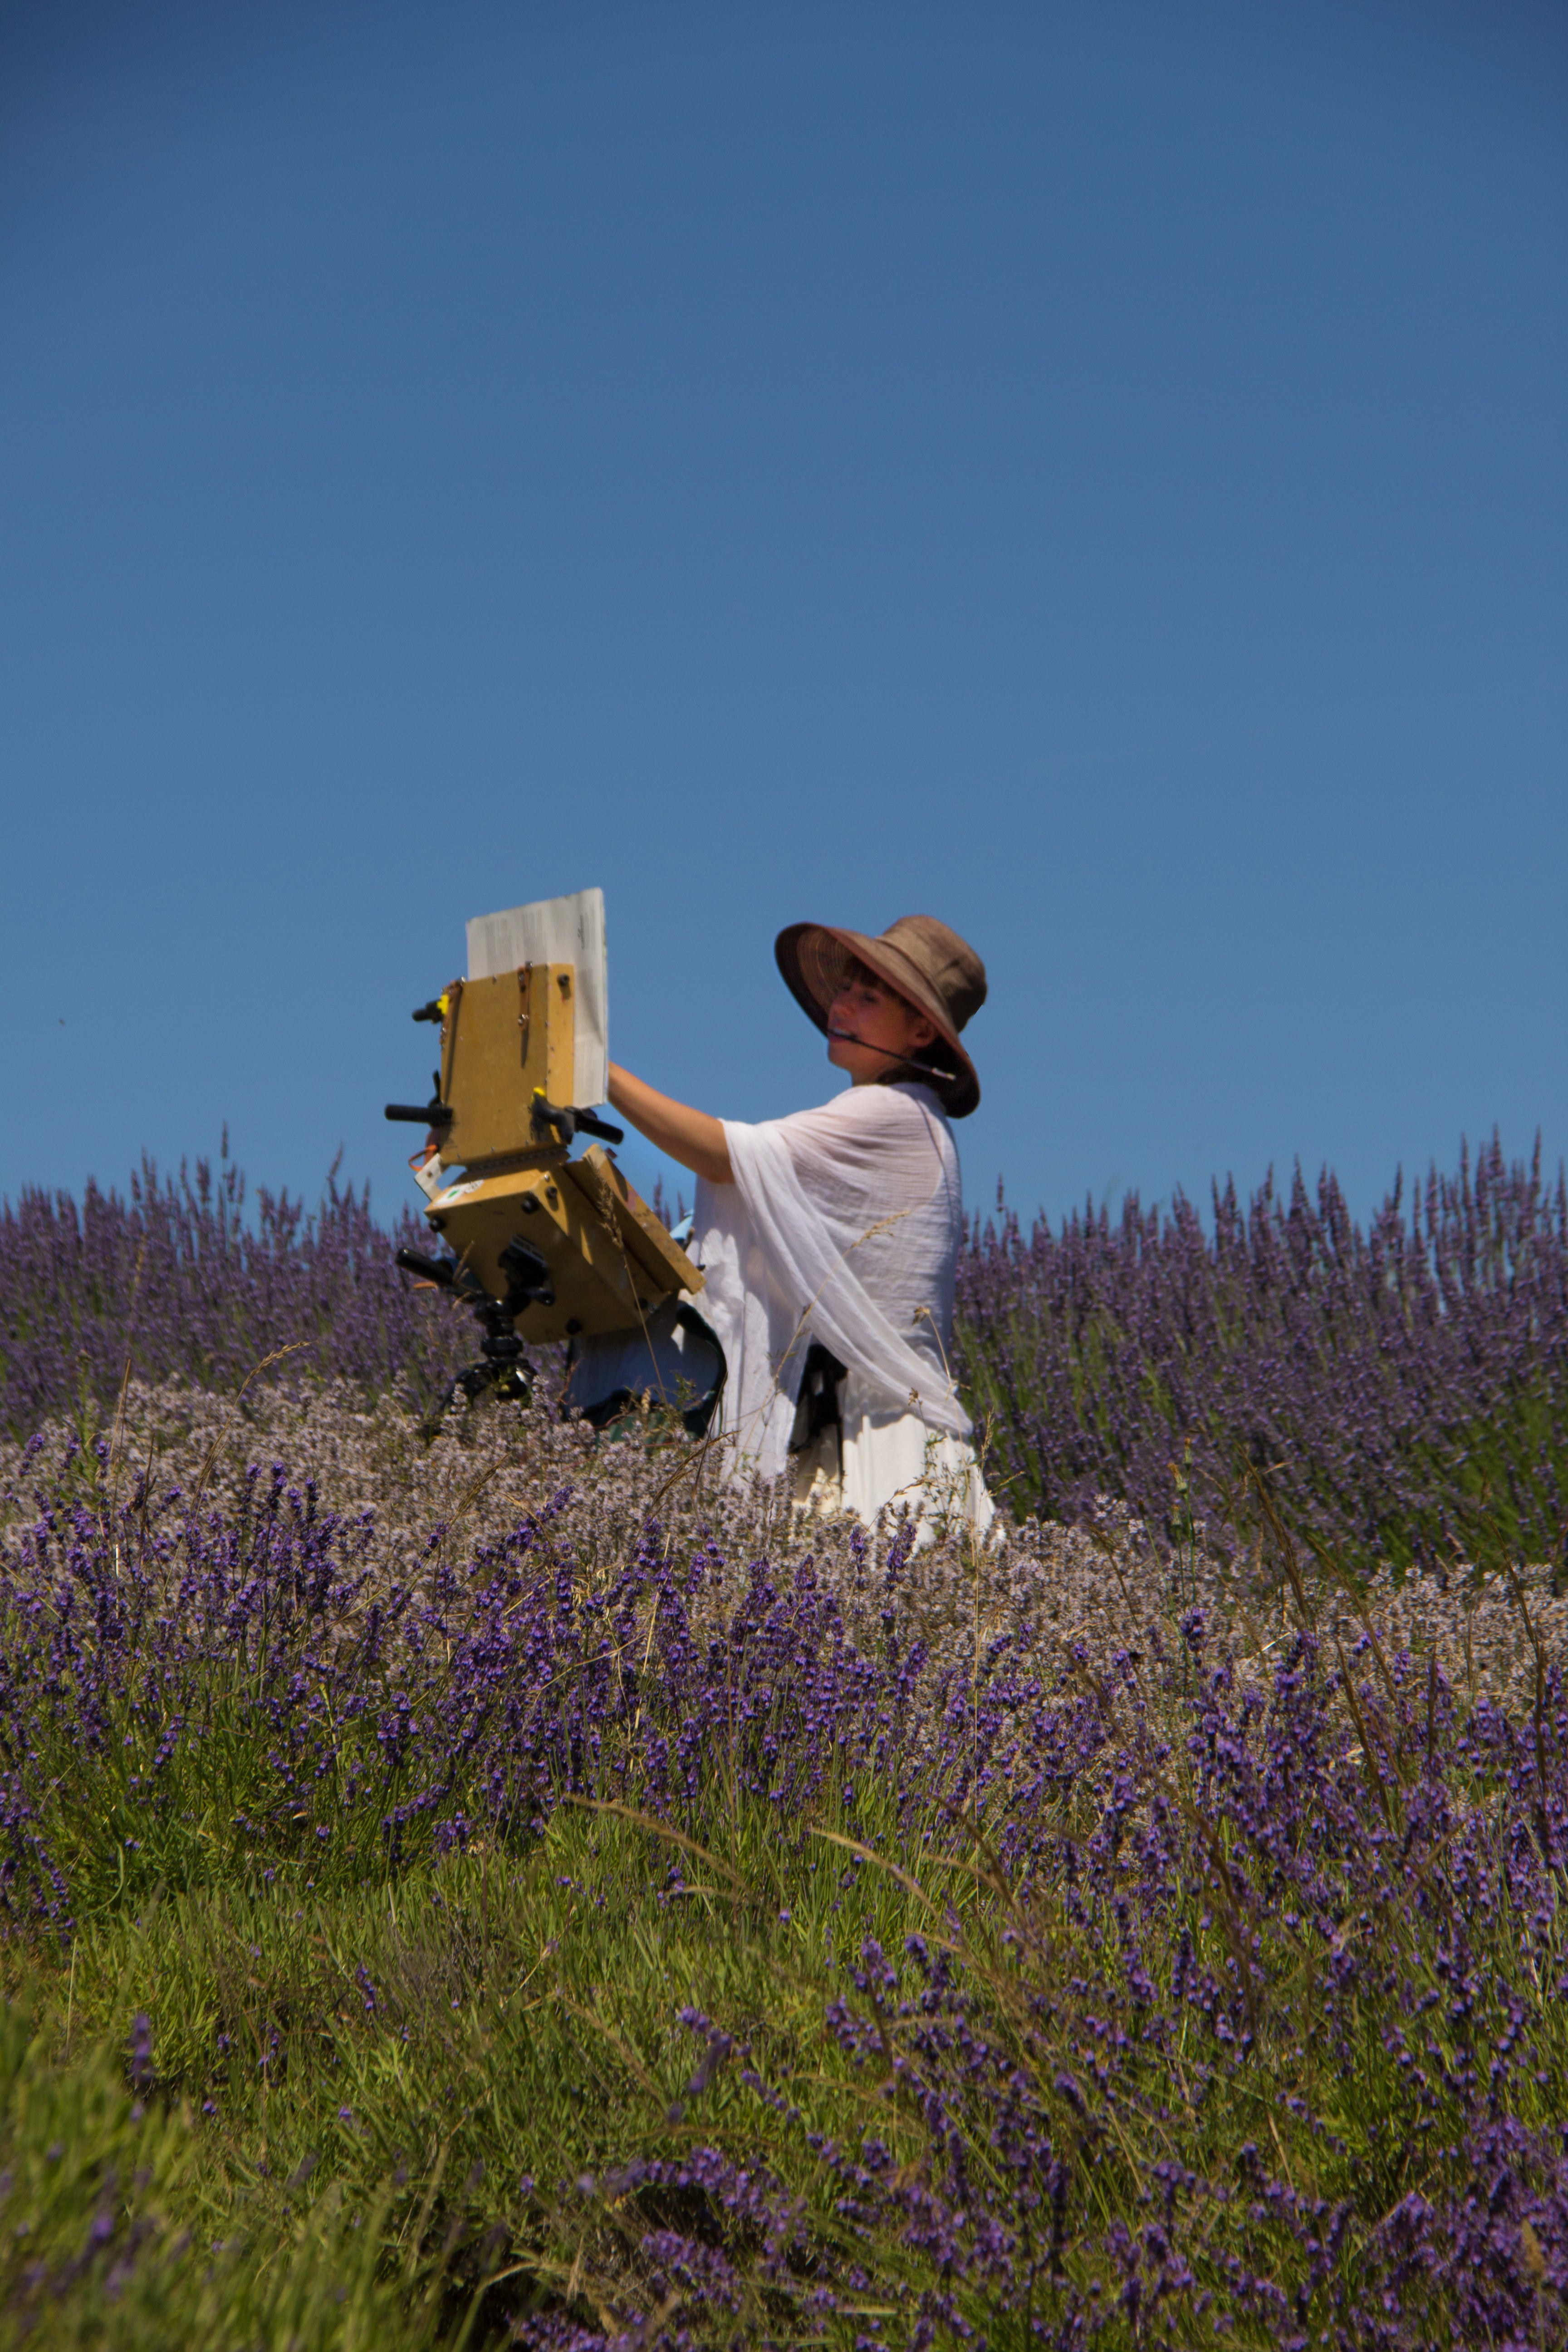 Artist Karen Whitworth in Lavender field painting lavender flowers